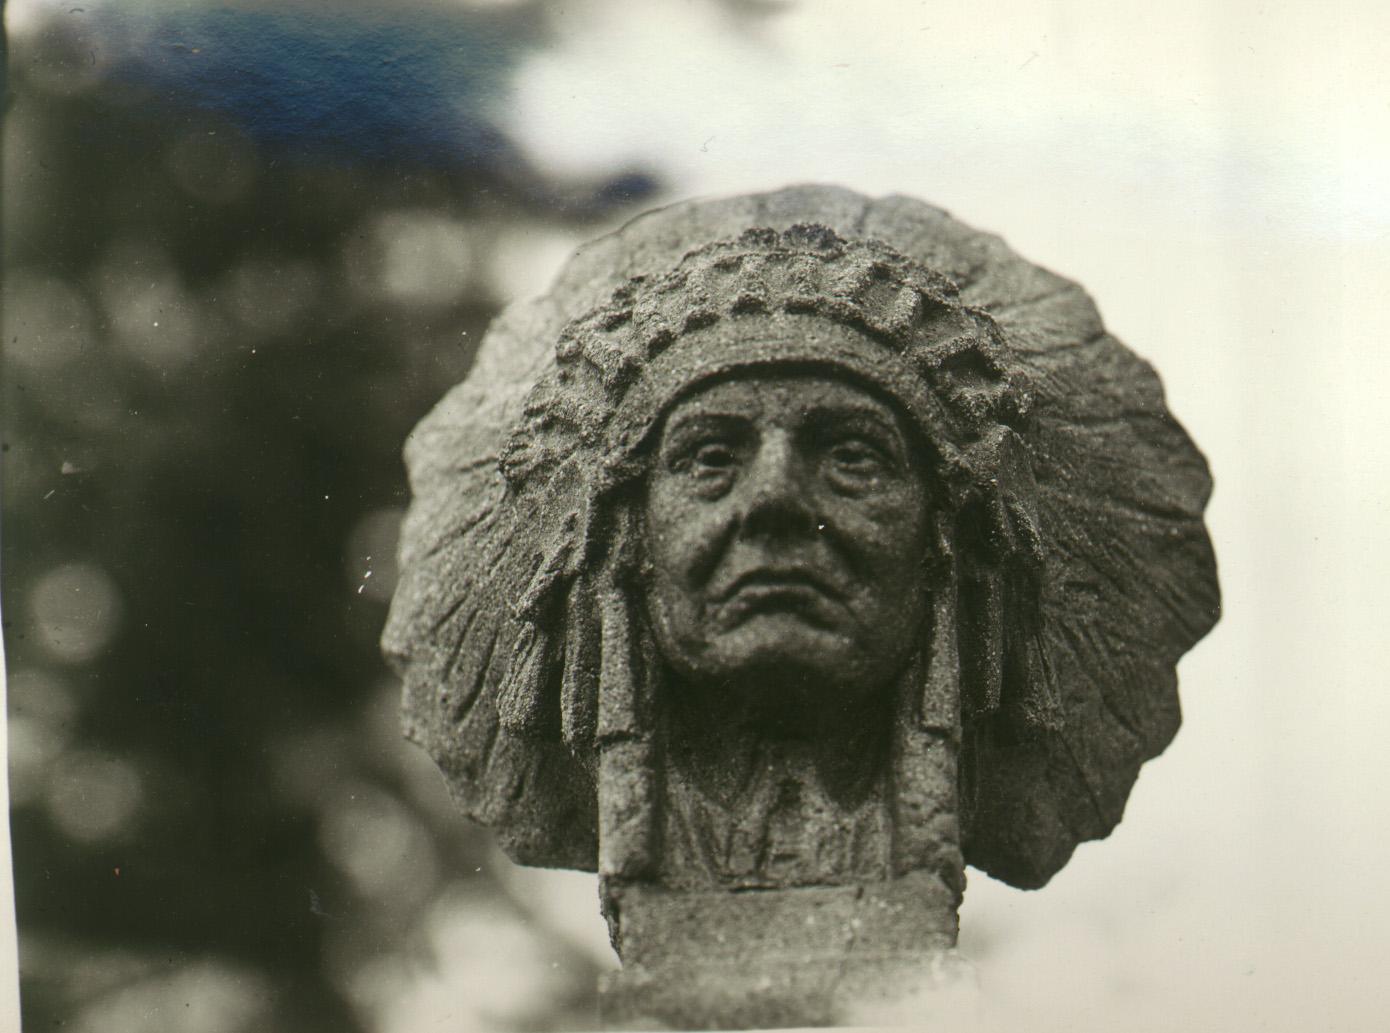 Stone carving of a Nez Perce Warrior's head in full regalia.